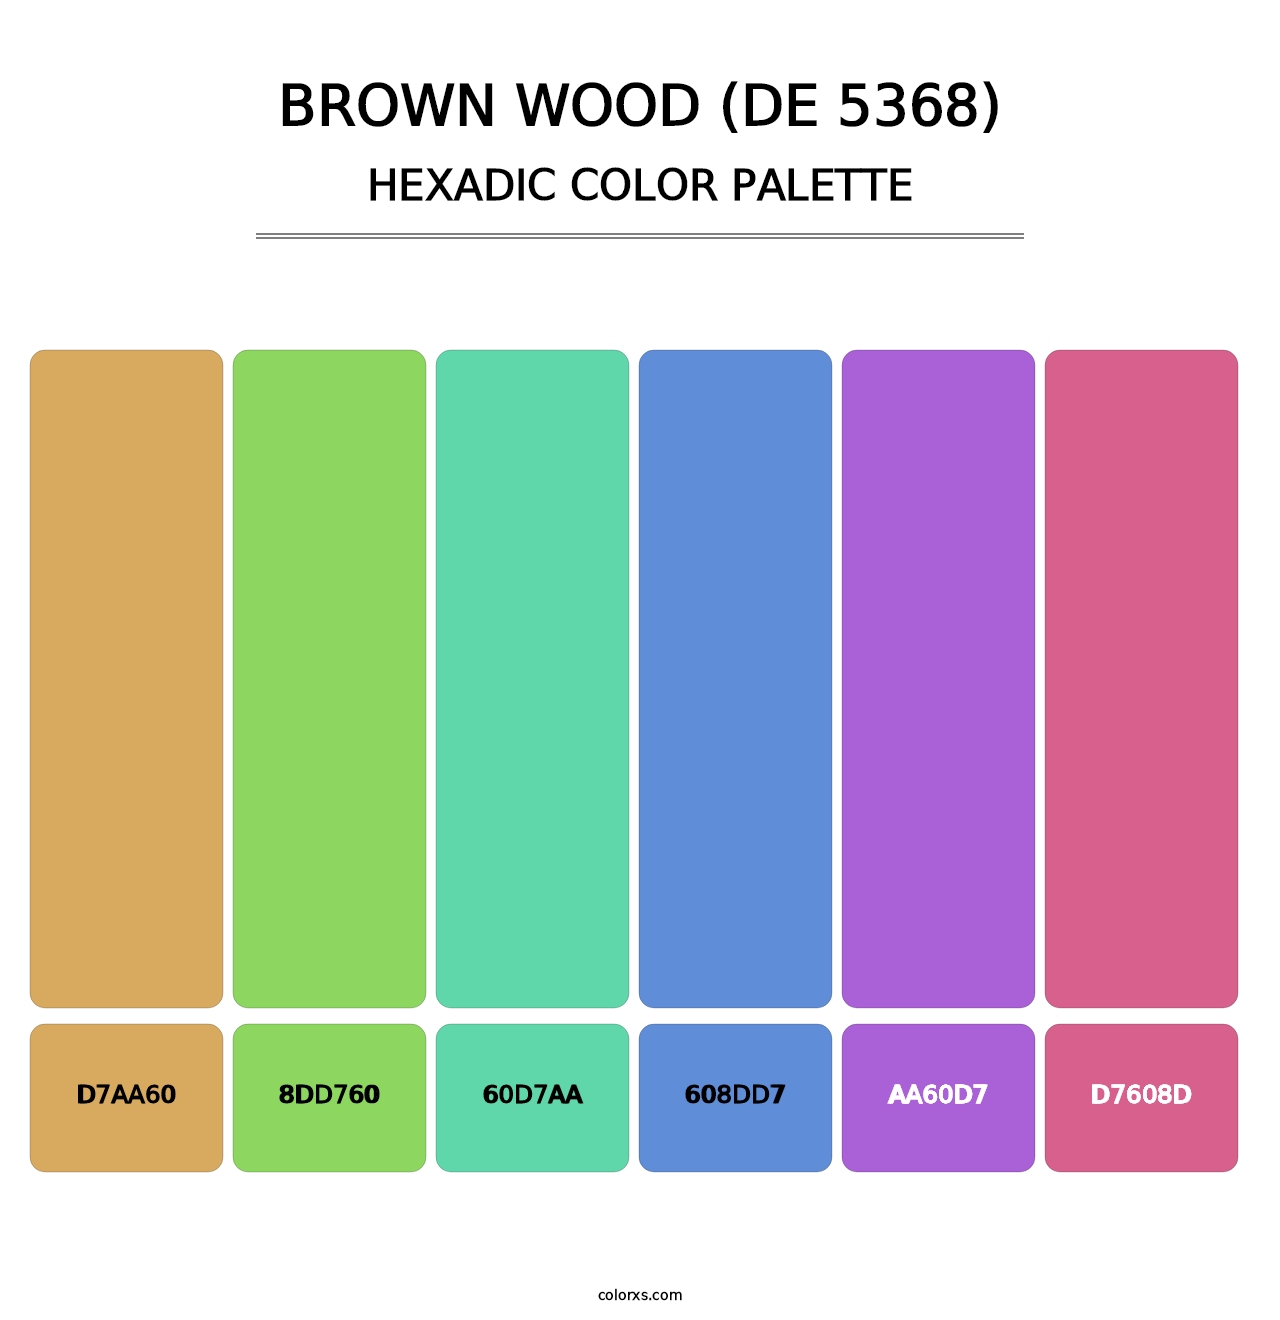 Brown Wood (DE 5368) - Hexadic Color Palette